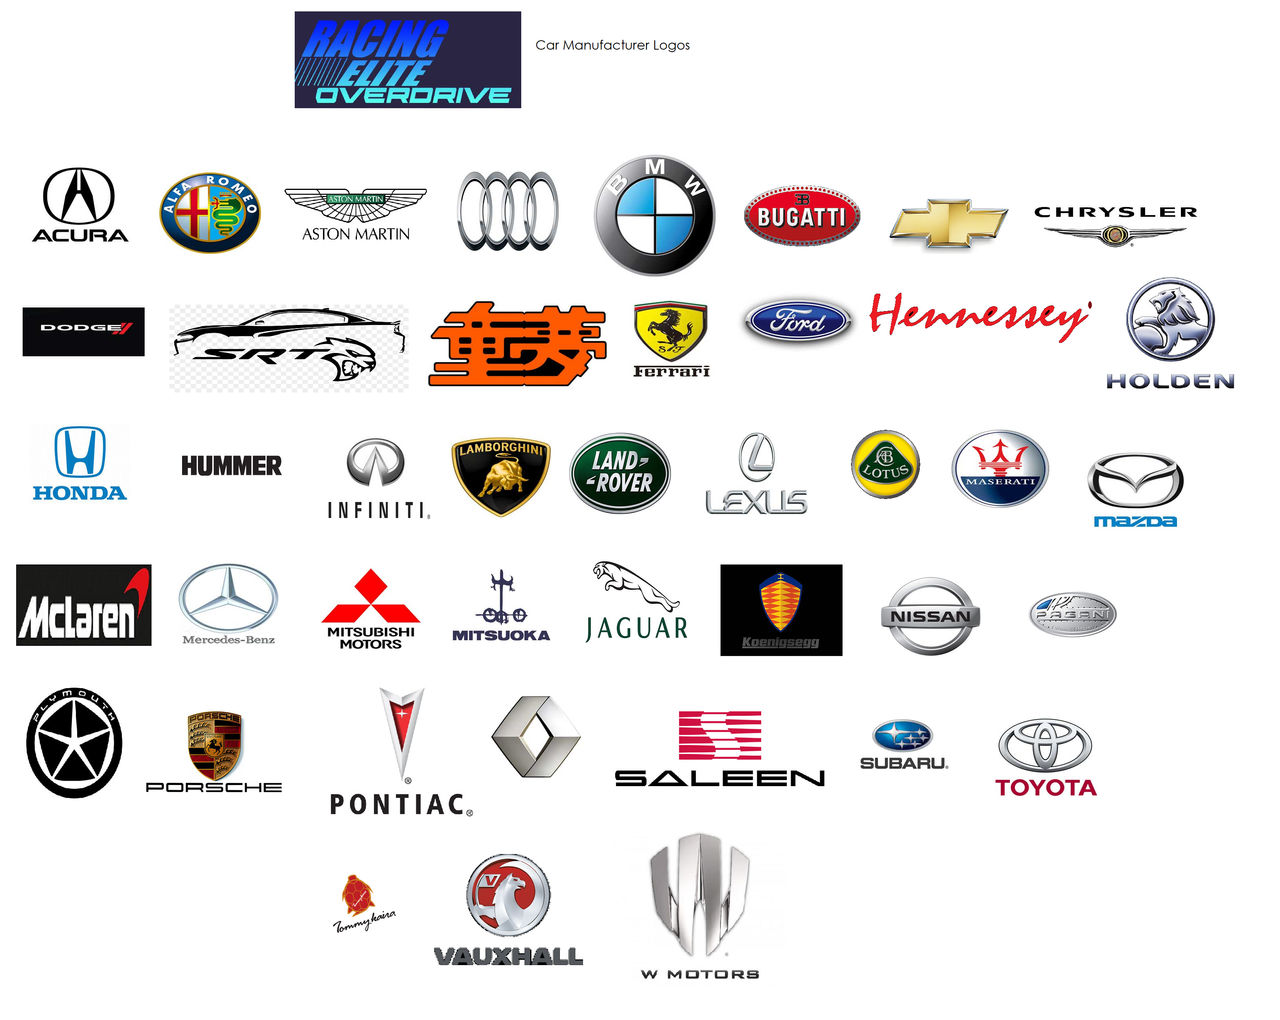 Racing Elite Overdrive Car Manufacturer Logos by SaucerofPeril on ...